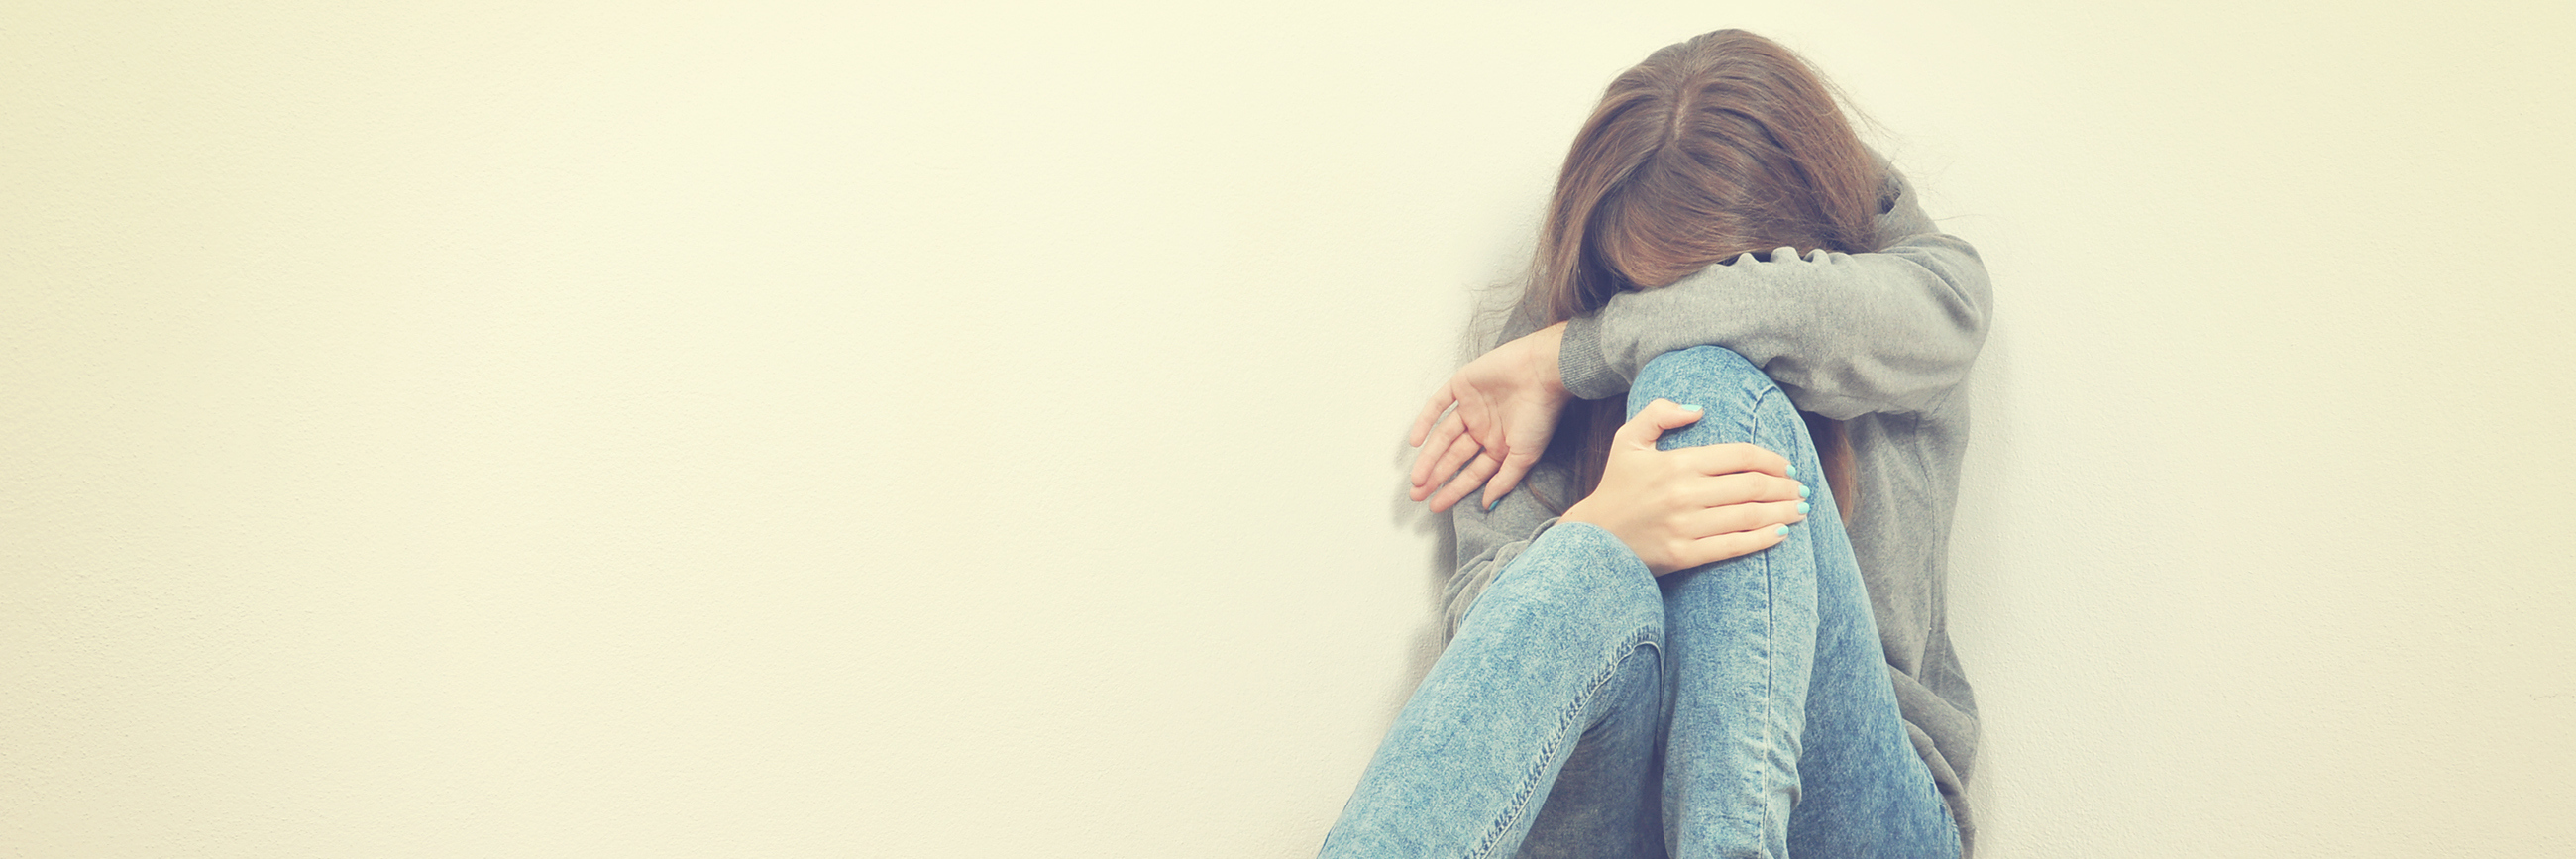 unhappy teen girl sitting in corner hugging knees